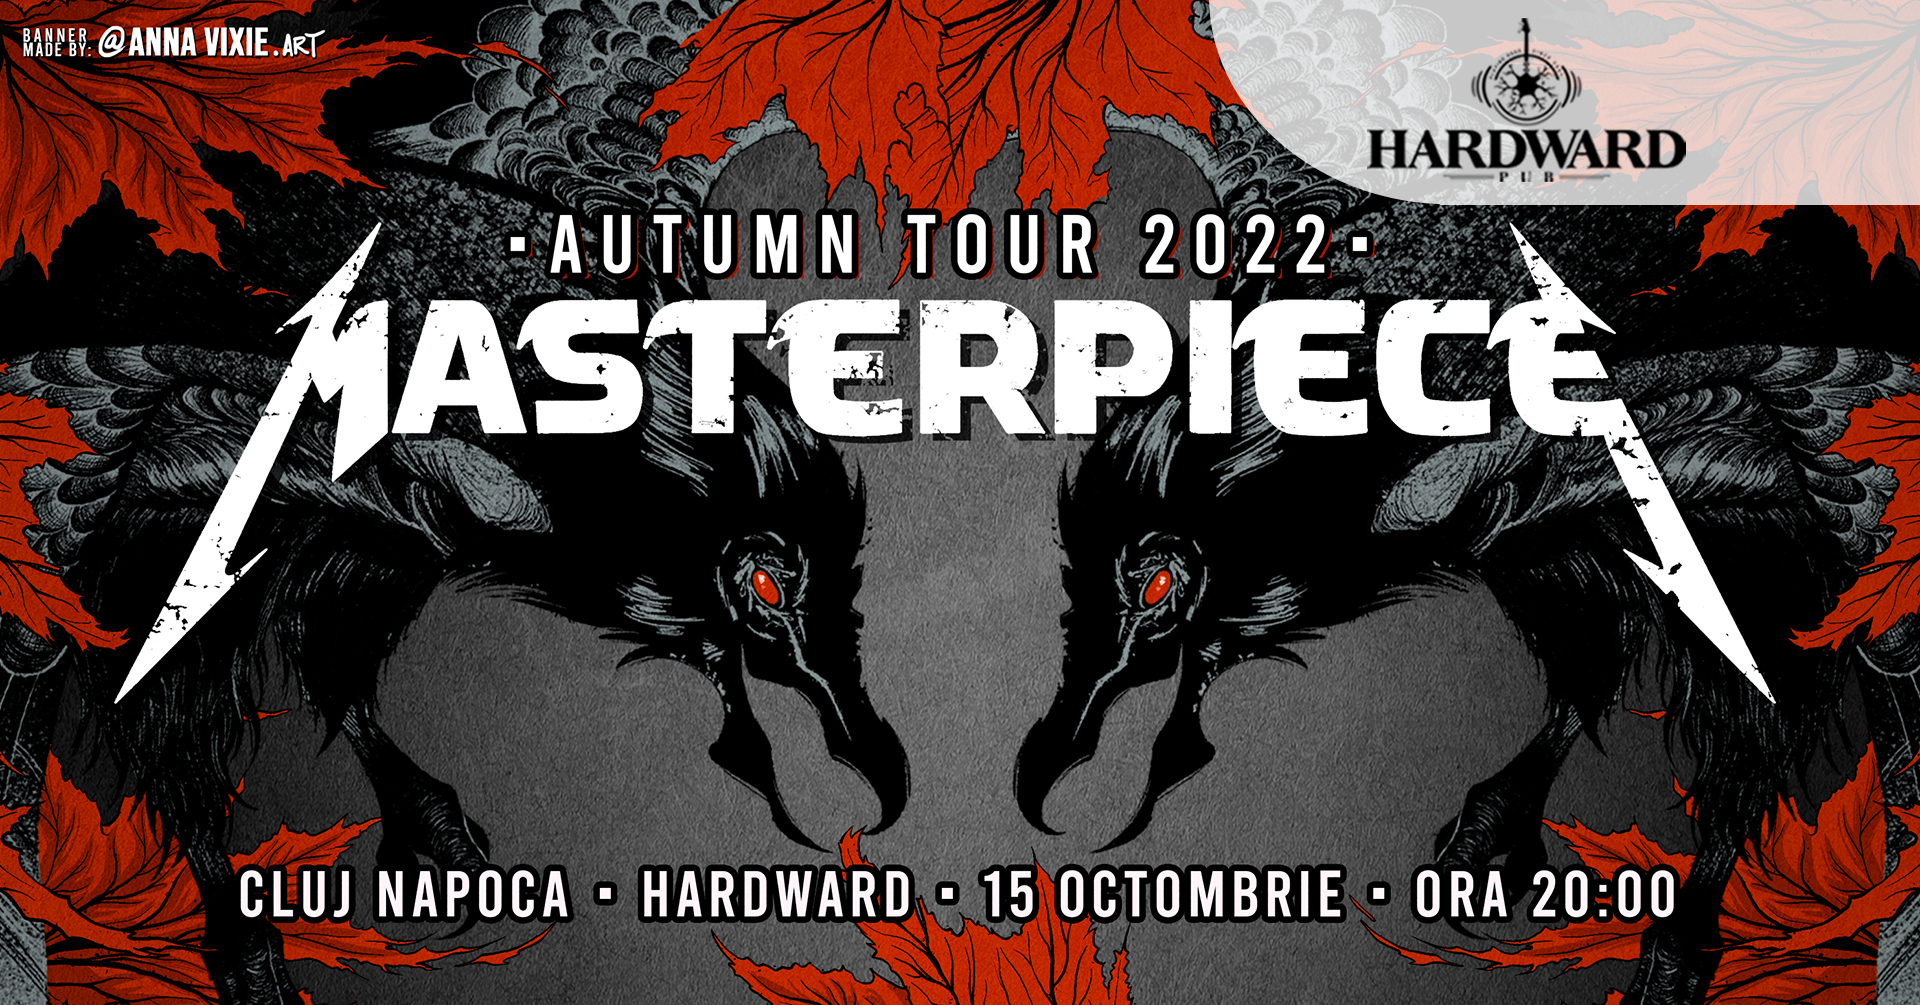 Masterpiece (Tribut Metallica) Live @ Hardward Pub - Cluj-Napoca